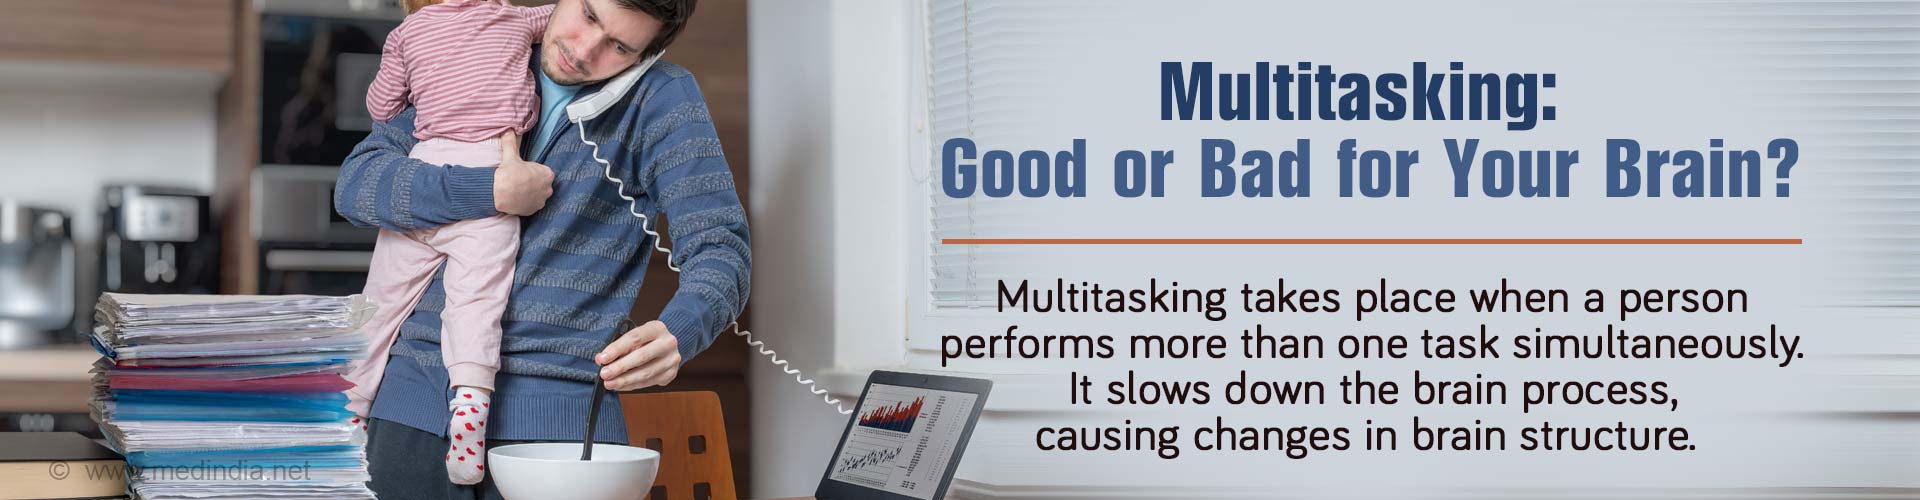 Multitasking: Good or Bad for Your Brain?